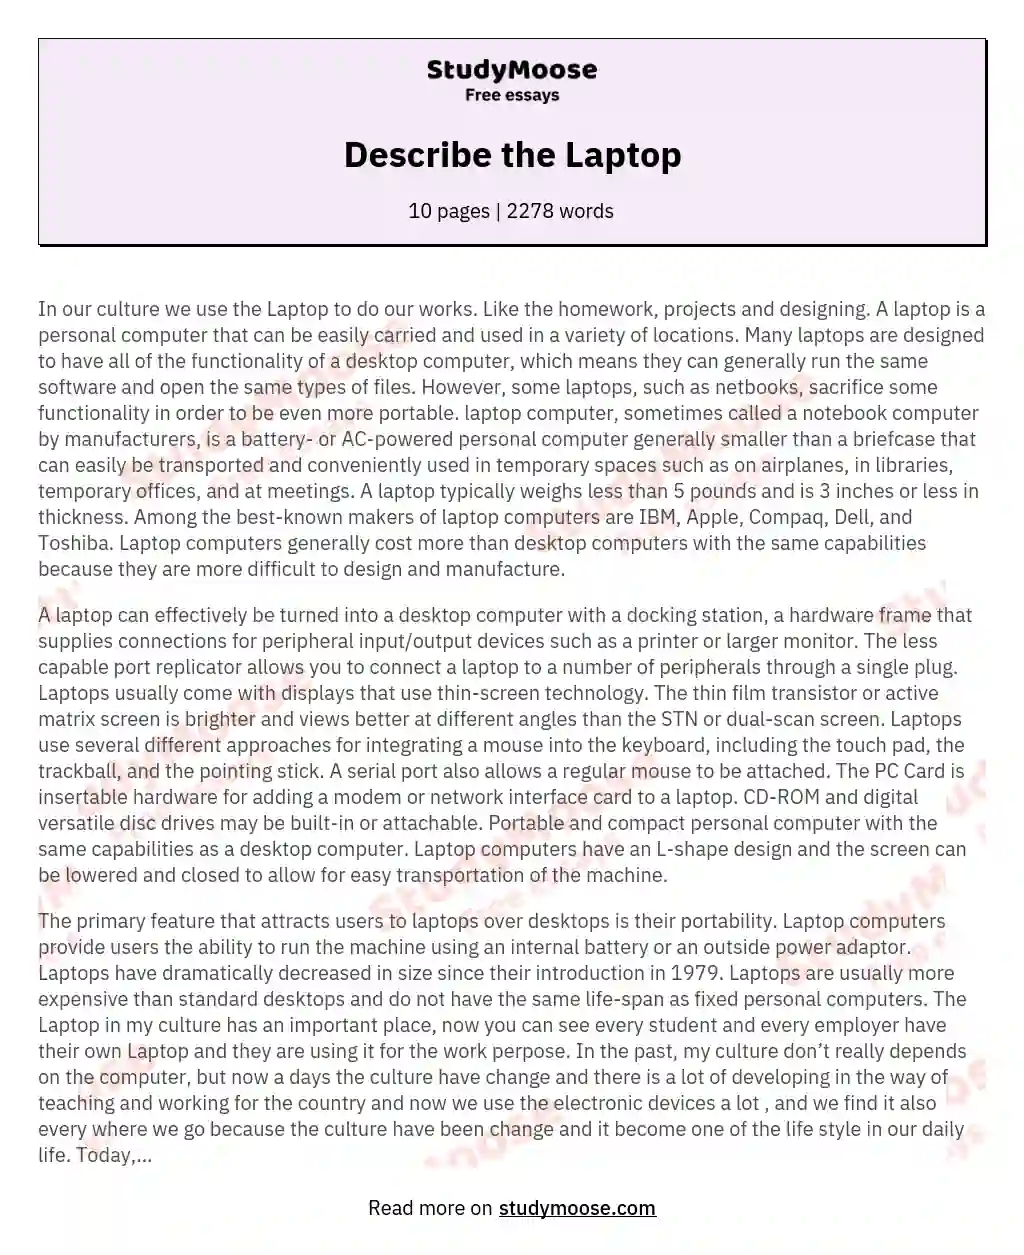 Describe the Laptop essay